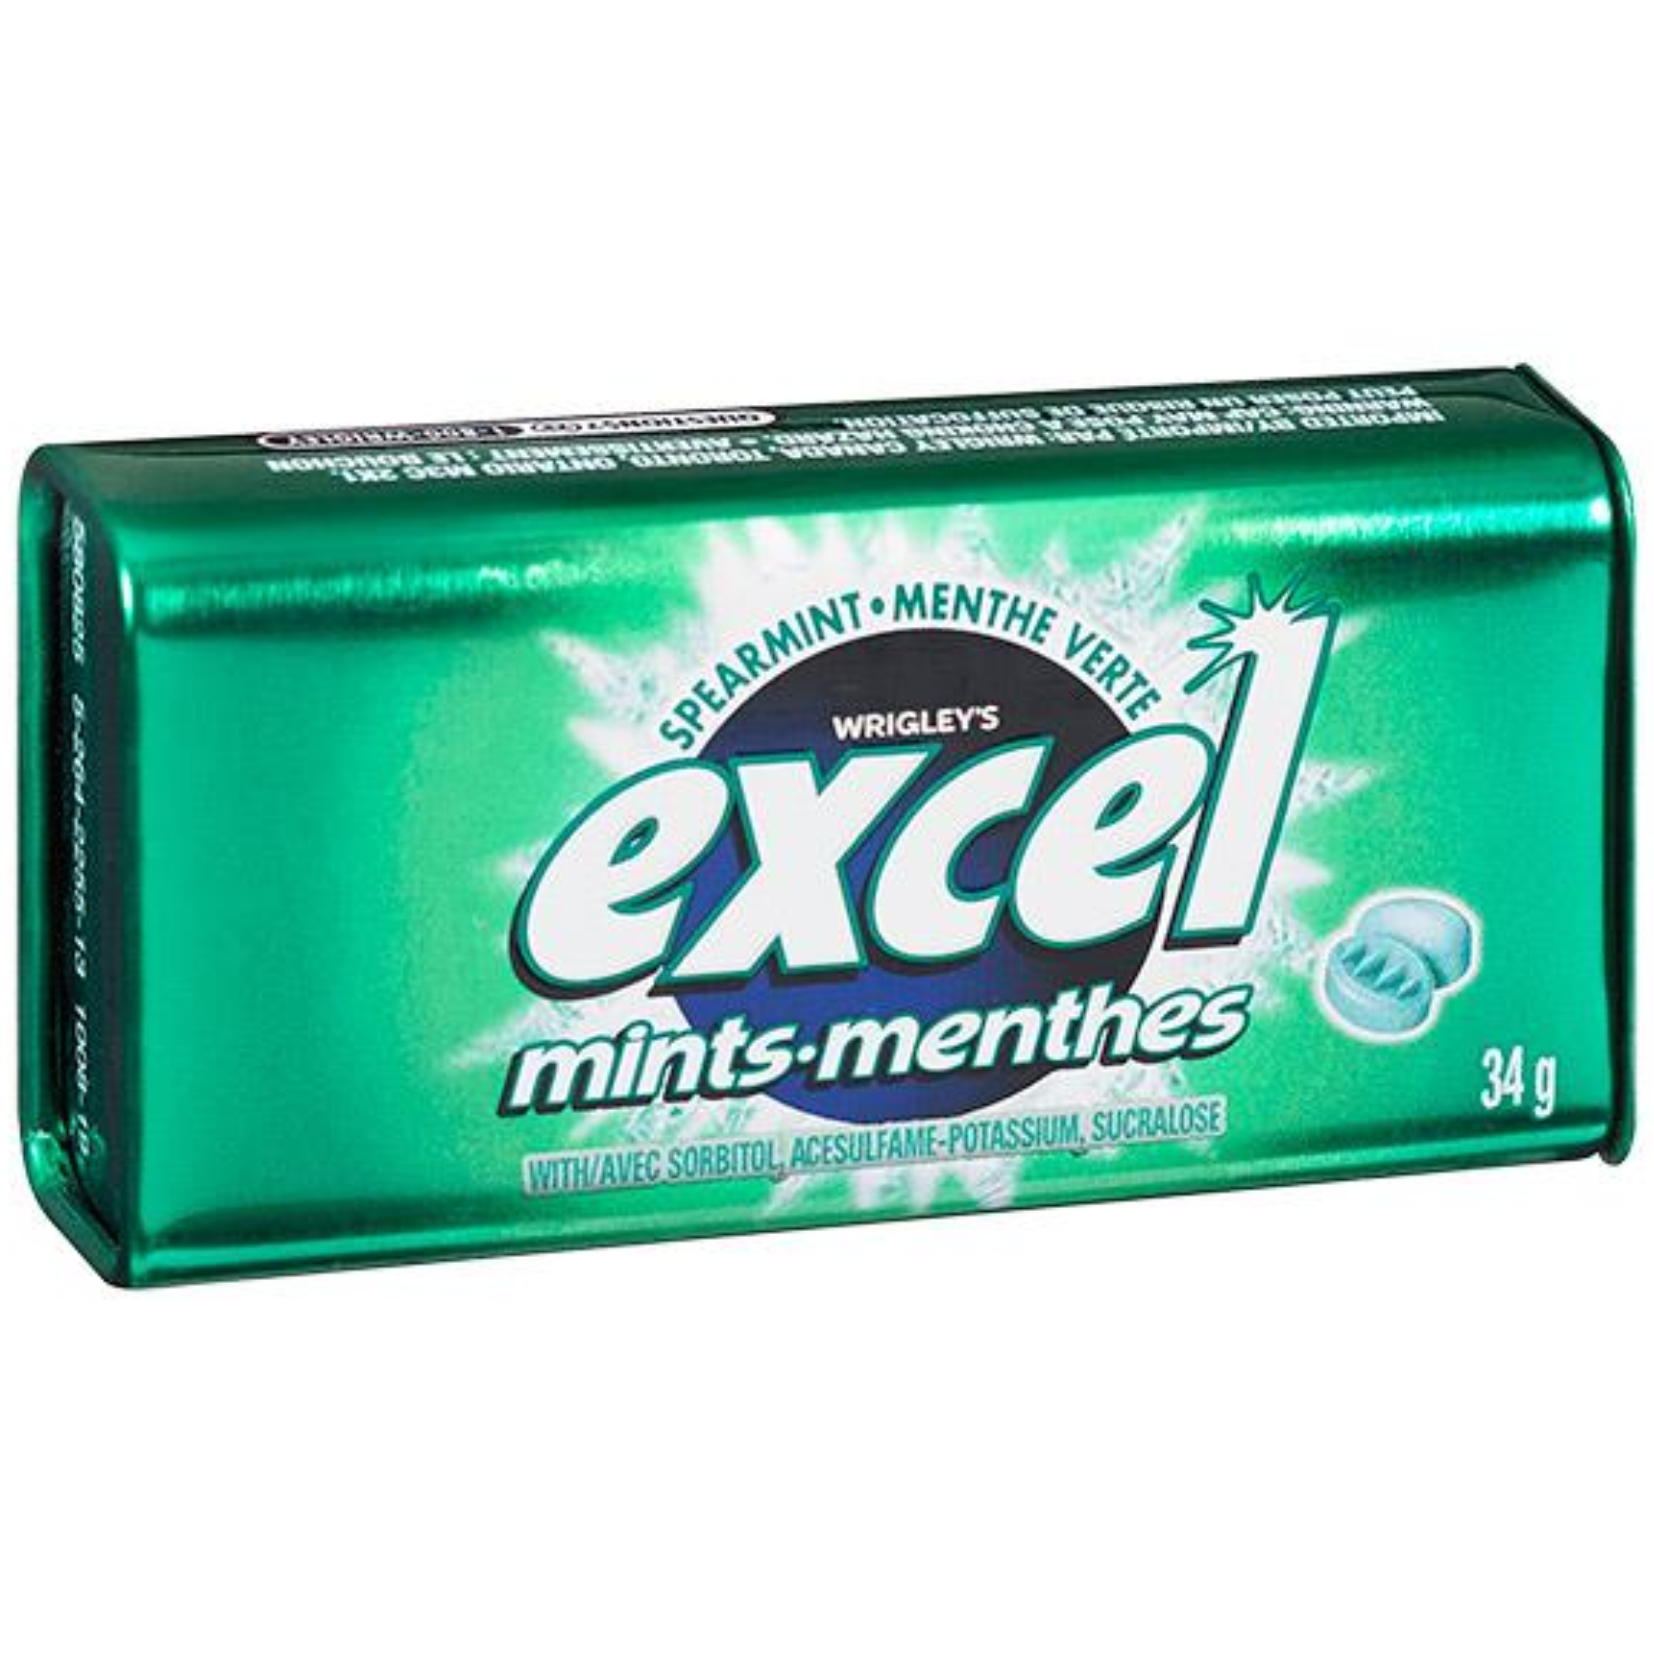 Wrigley's Excel Spearmint Mints 34g